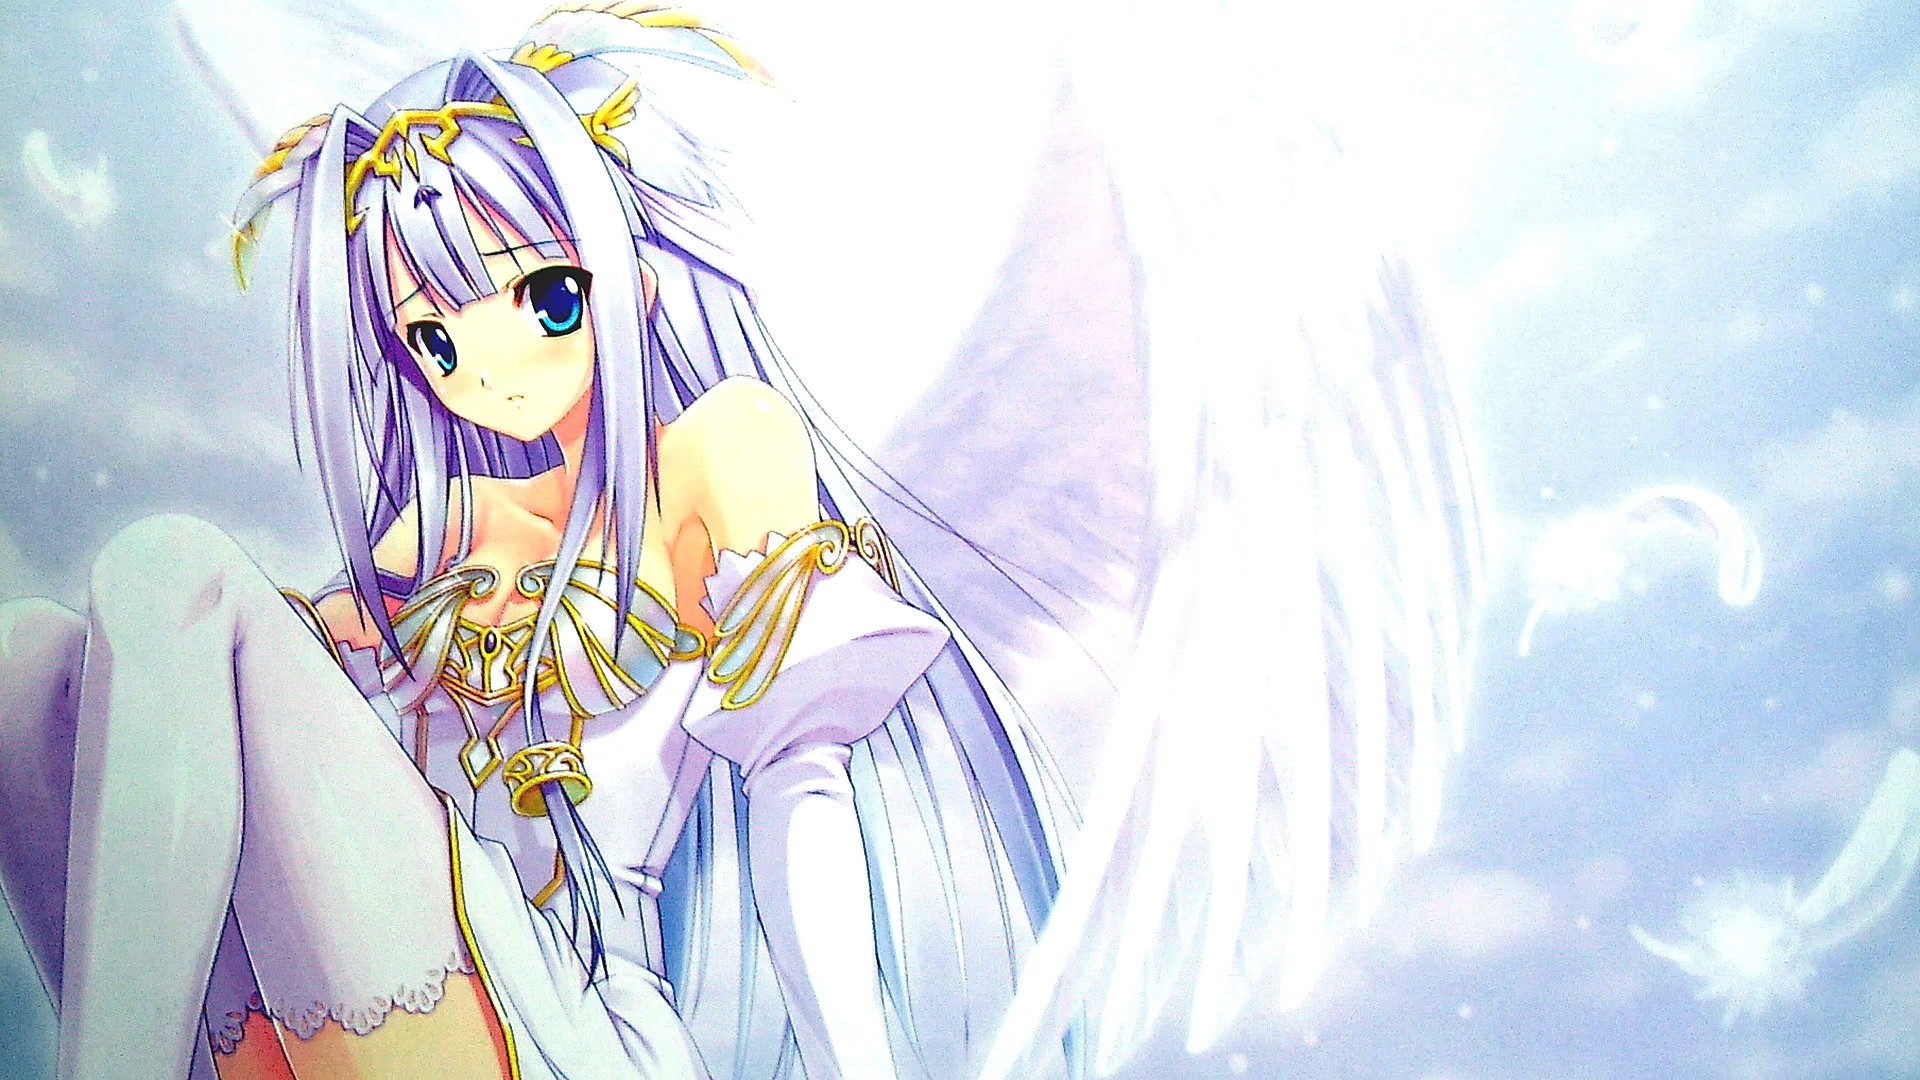 Anime 1920x1080 anime anime girls Sayori angel wings original characters angel girl blue eyes fantasy art fantasy girl stockings purple hair long hair